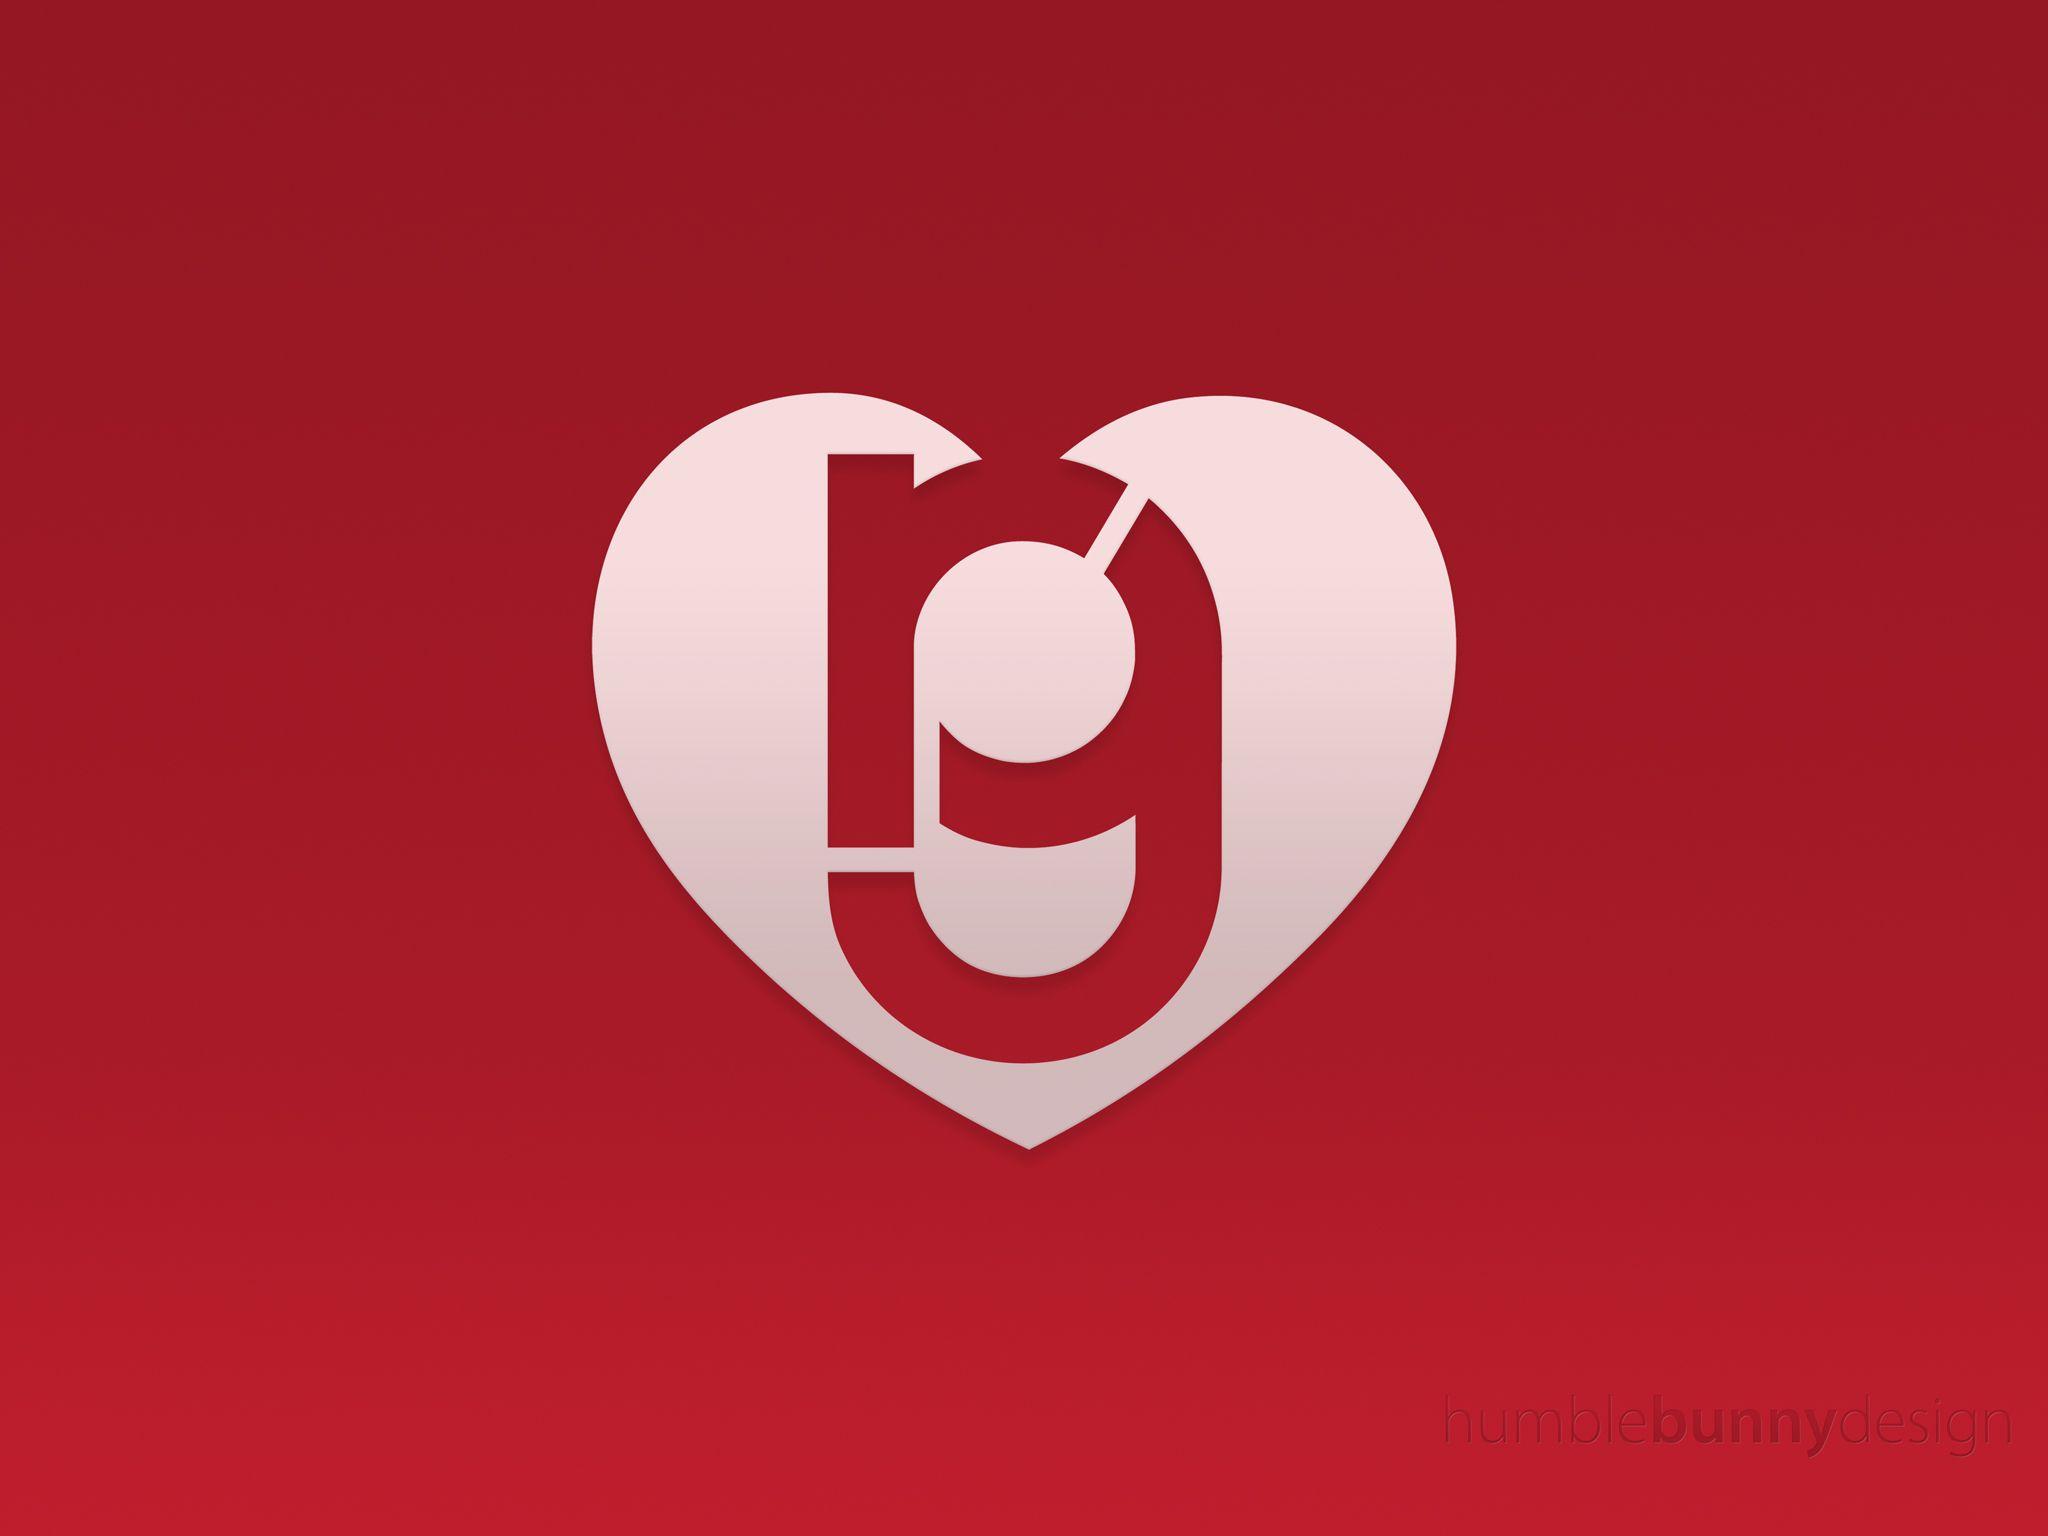 High Resolution LinkedIn Logo - 16 Pinterest Logo Icon High Res Images - Pinterest Logo Transparent ...